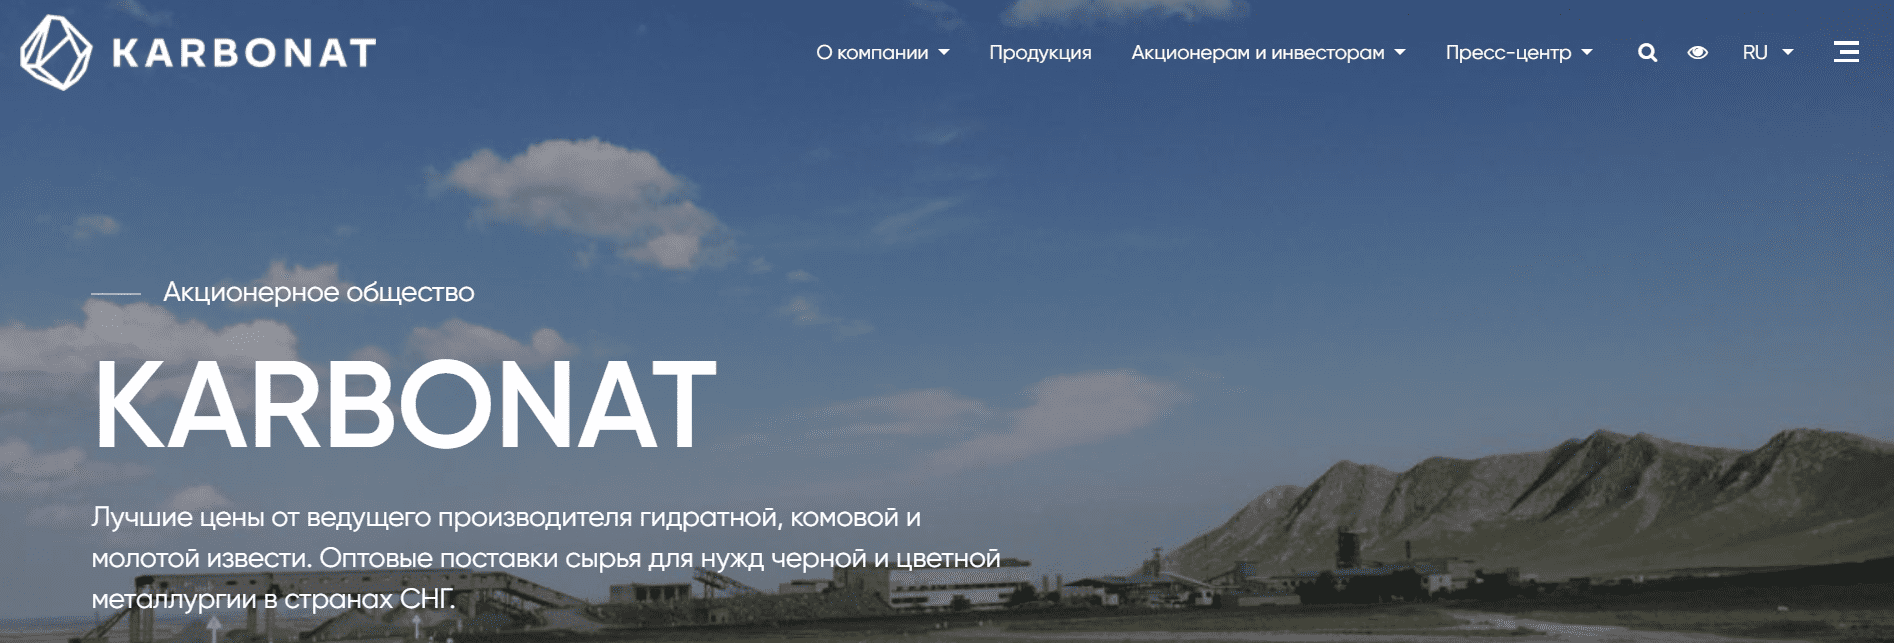 KARBONAT (karbonat.uz) - официальный сайт